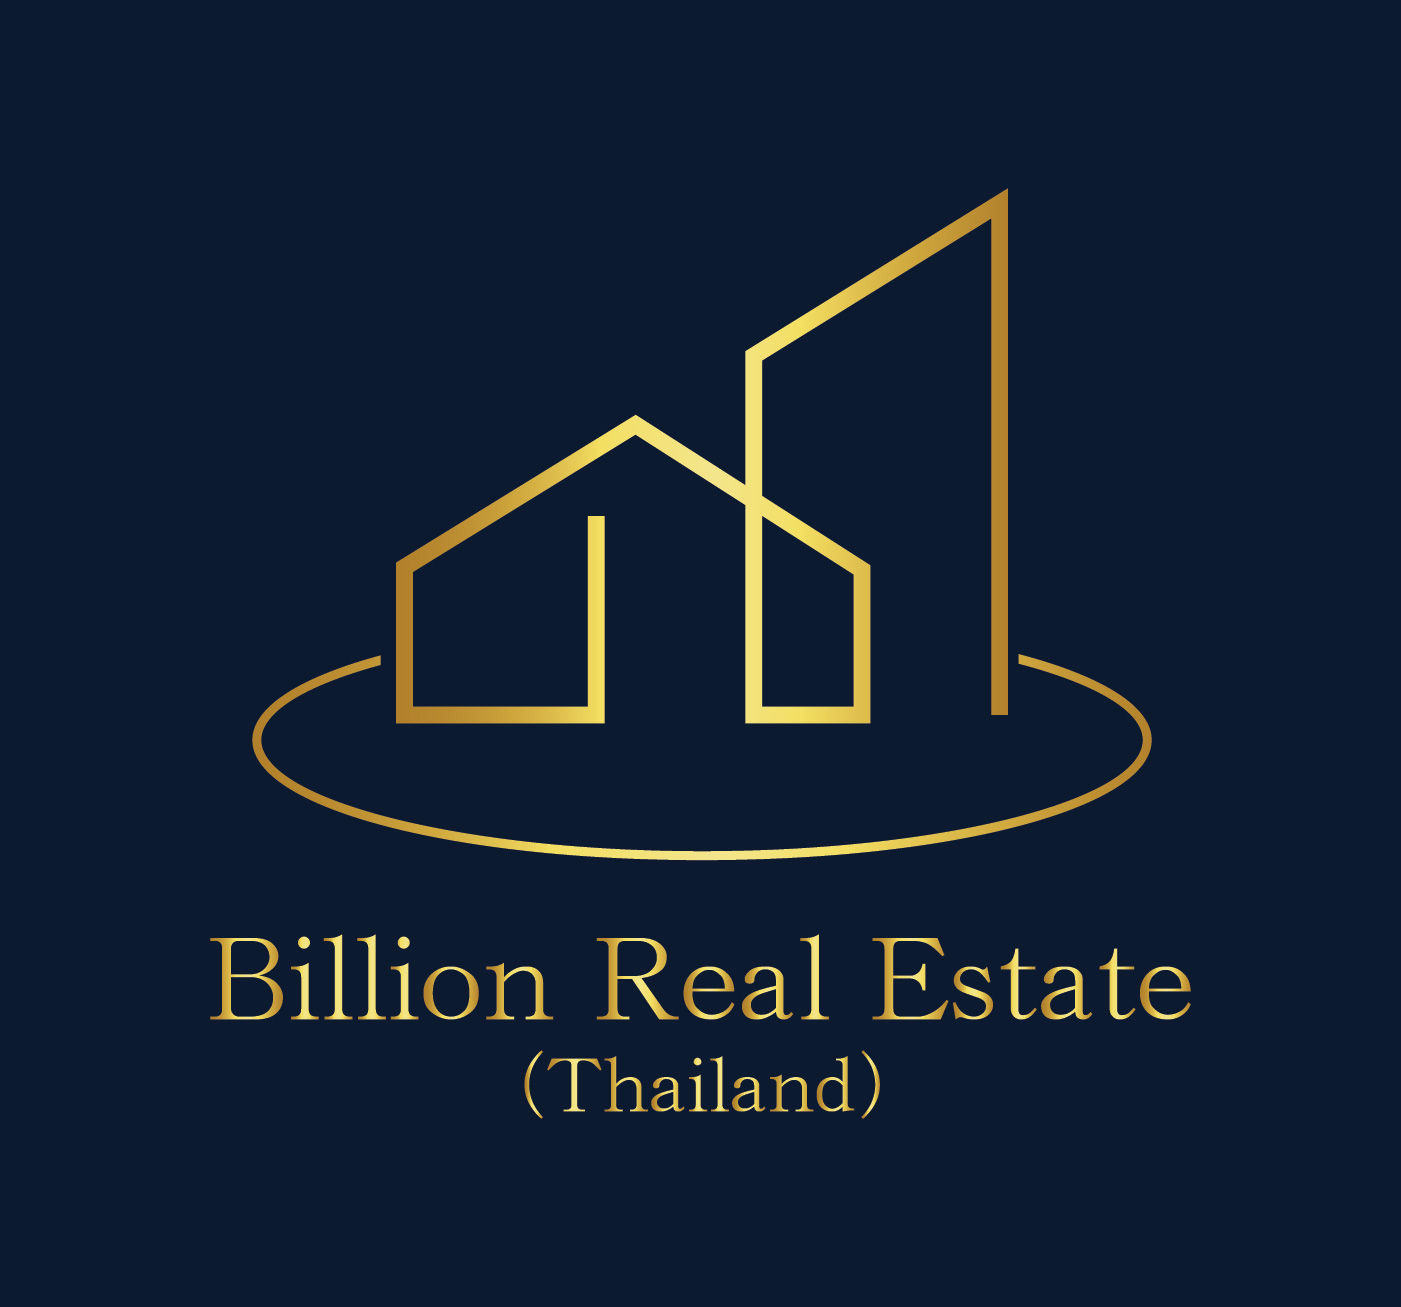 Billion Real Estate ( Thailand ) logo โลโก้